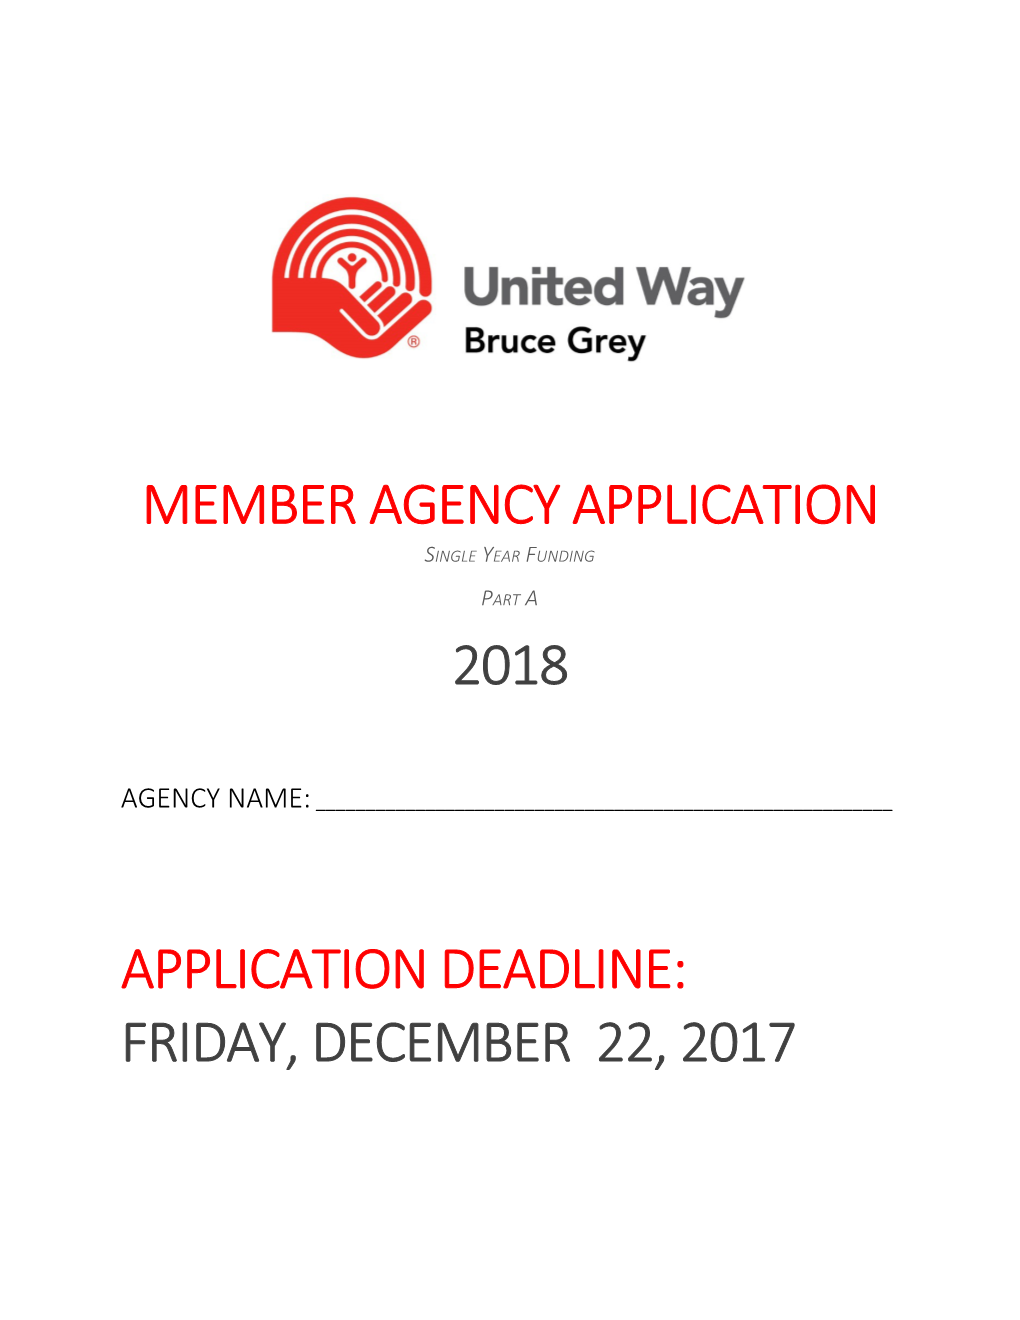 Member Agency Application